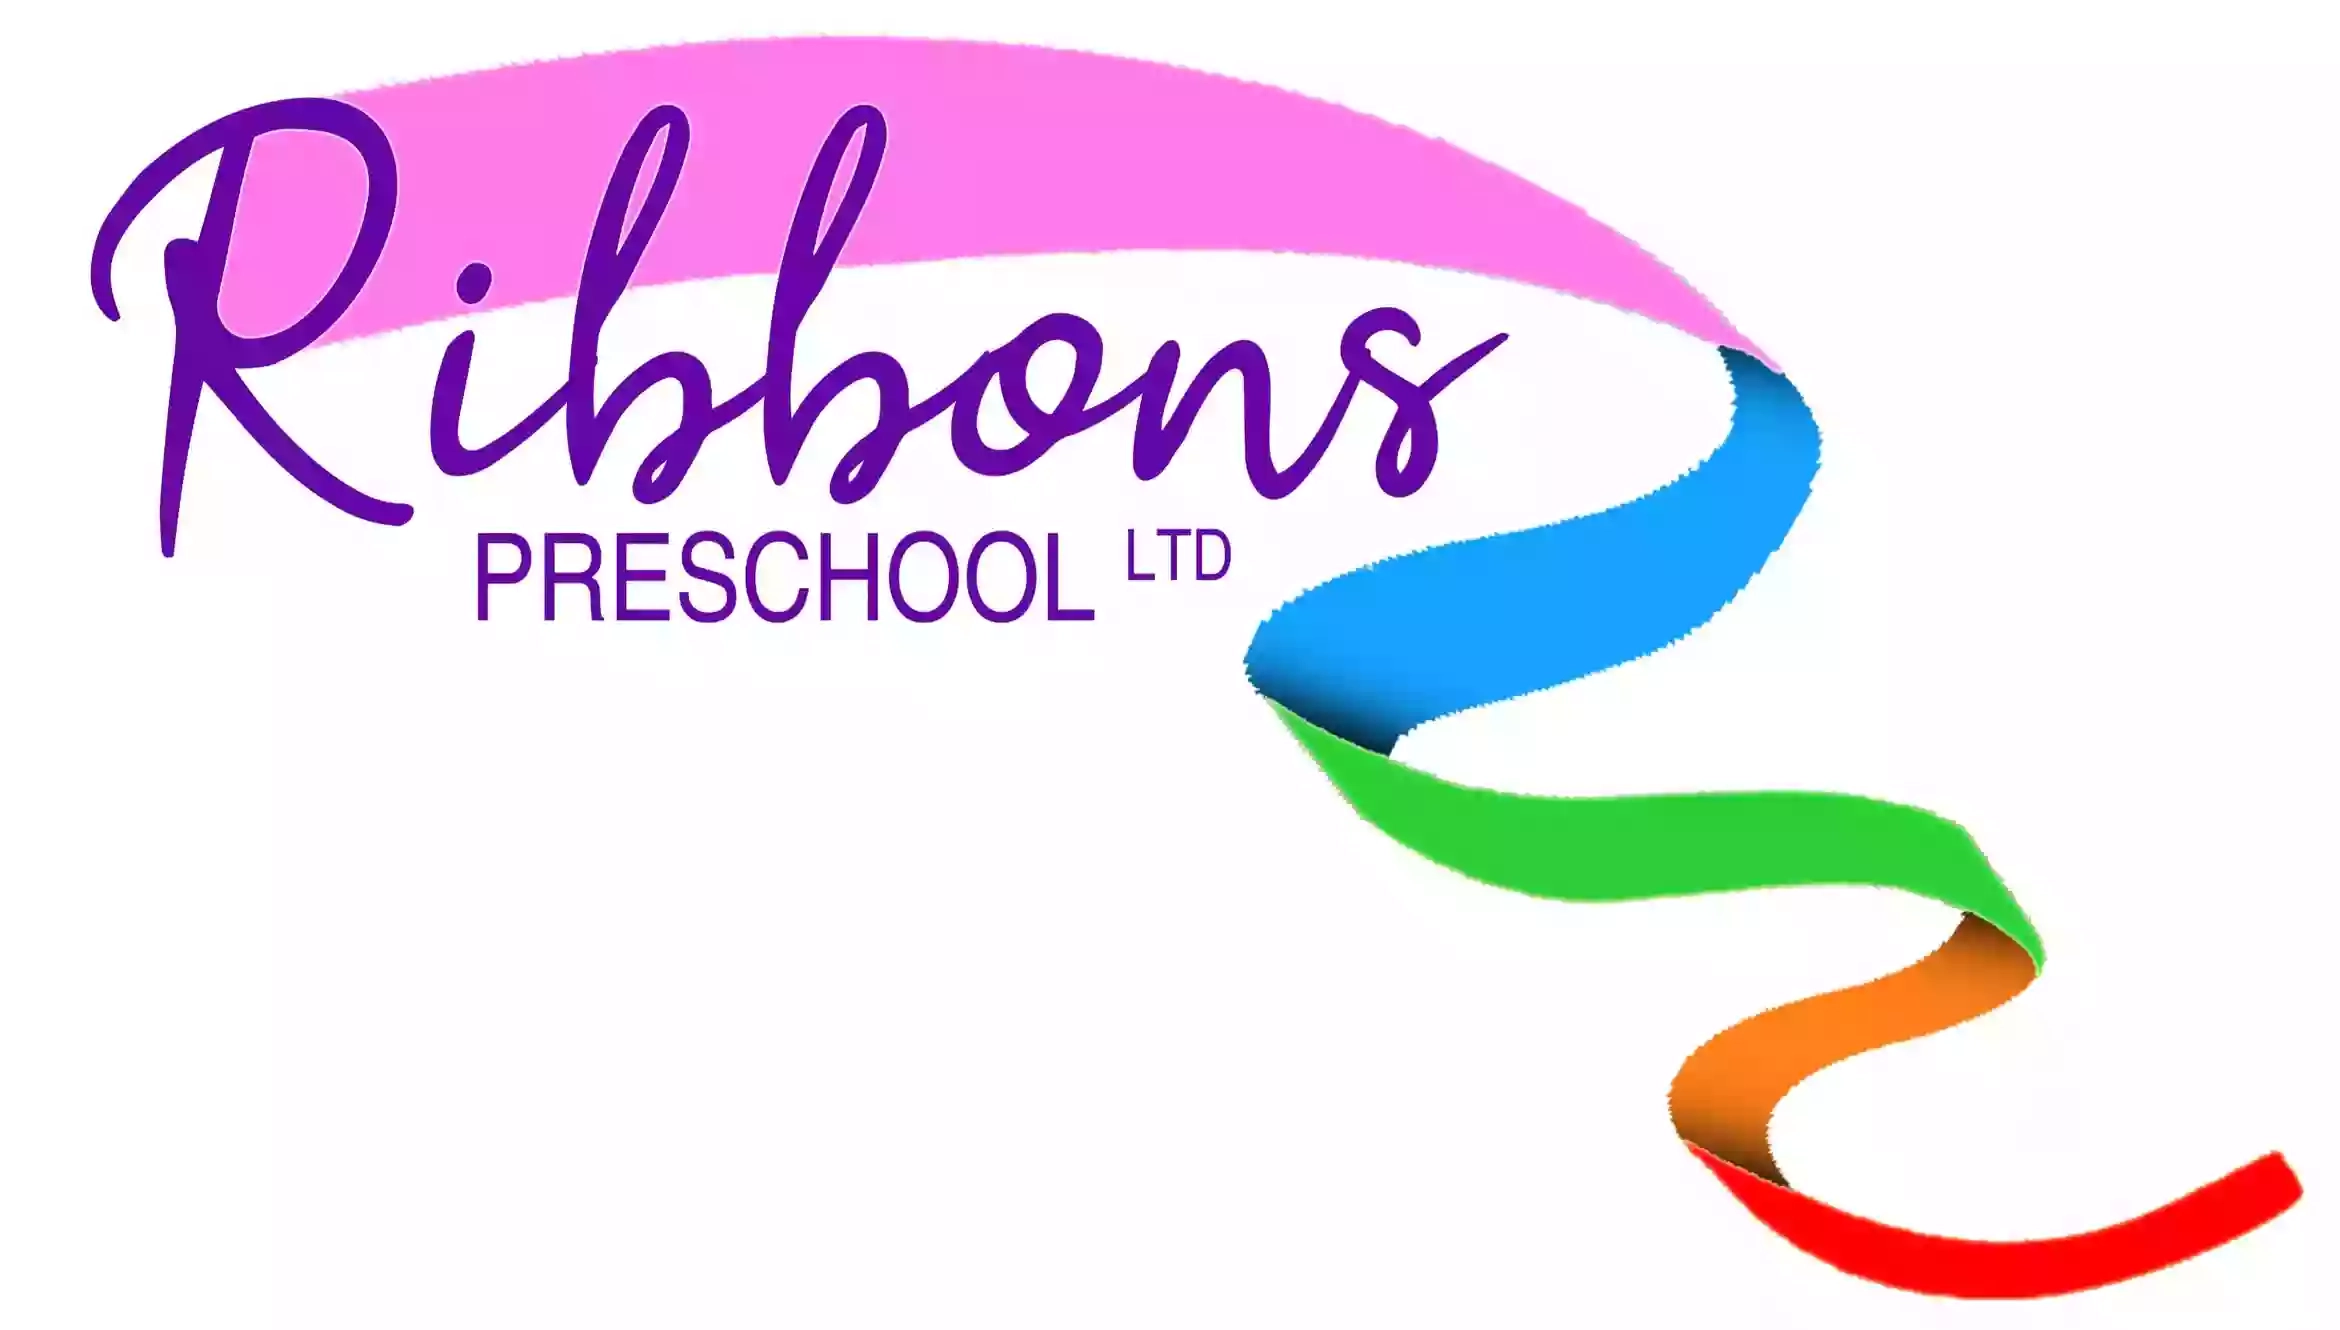 Ribbons Preschool Ltd